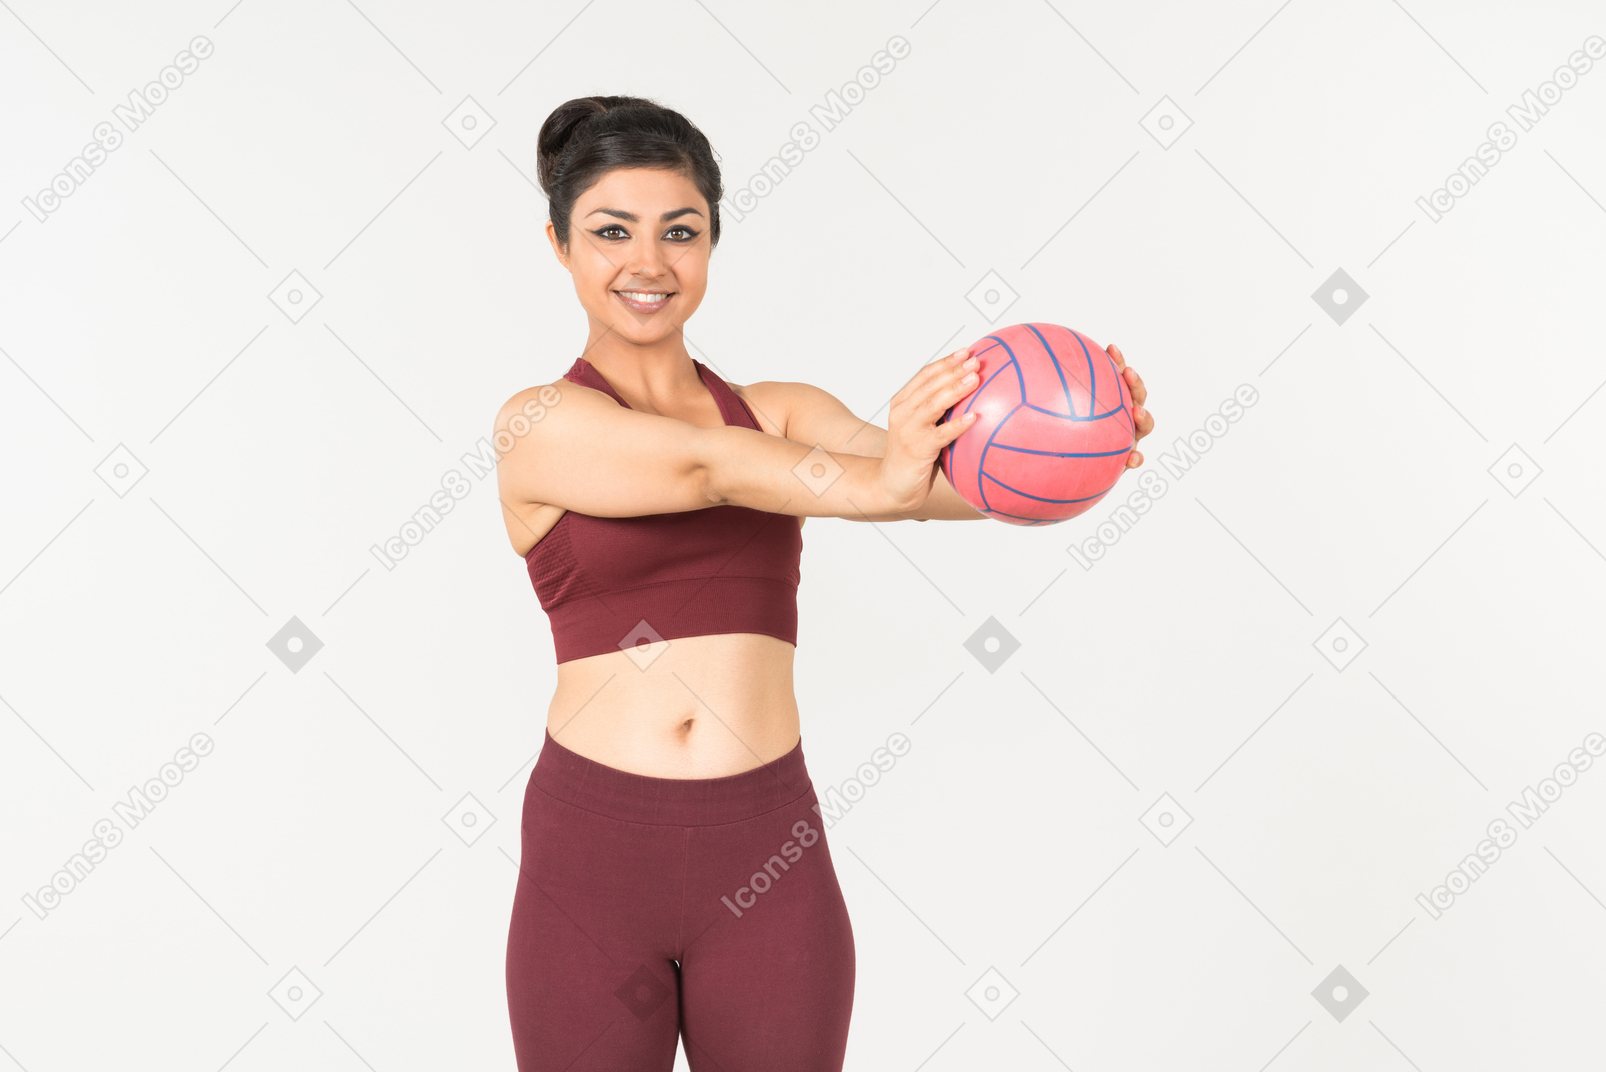 Giovane donna indiana in palla sporstwear holding